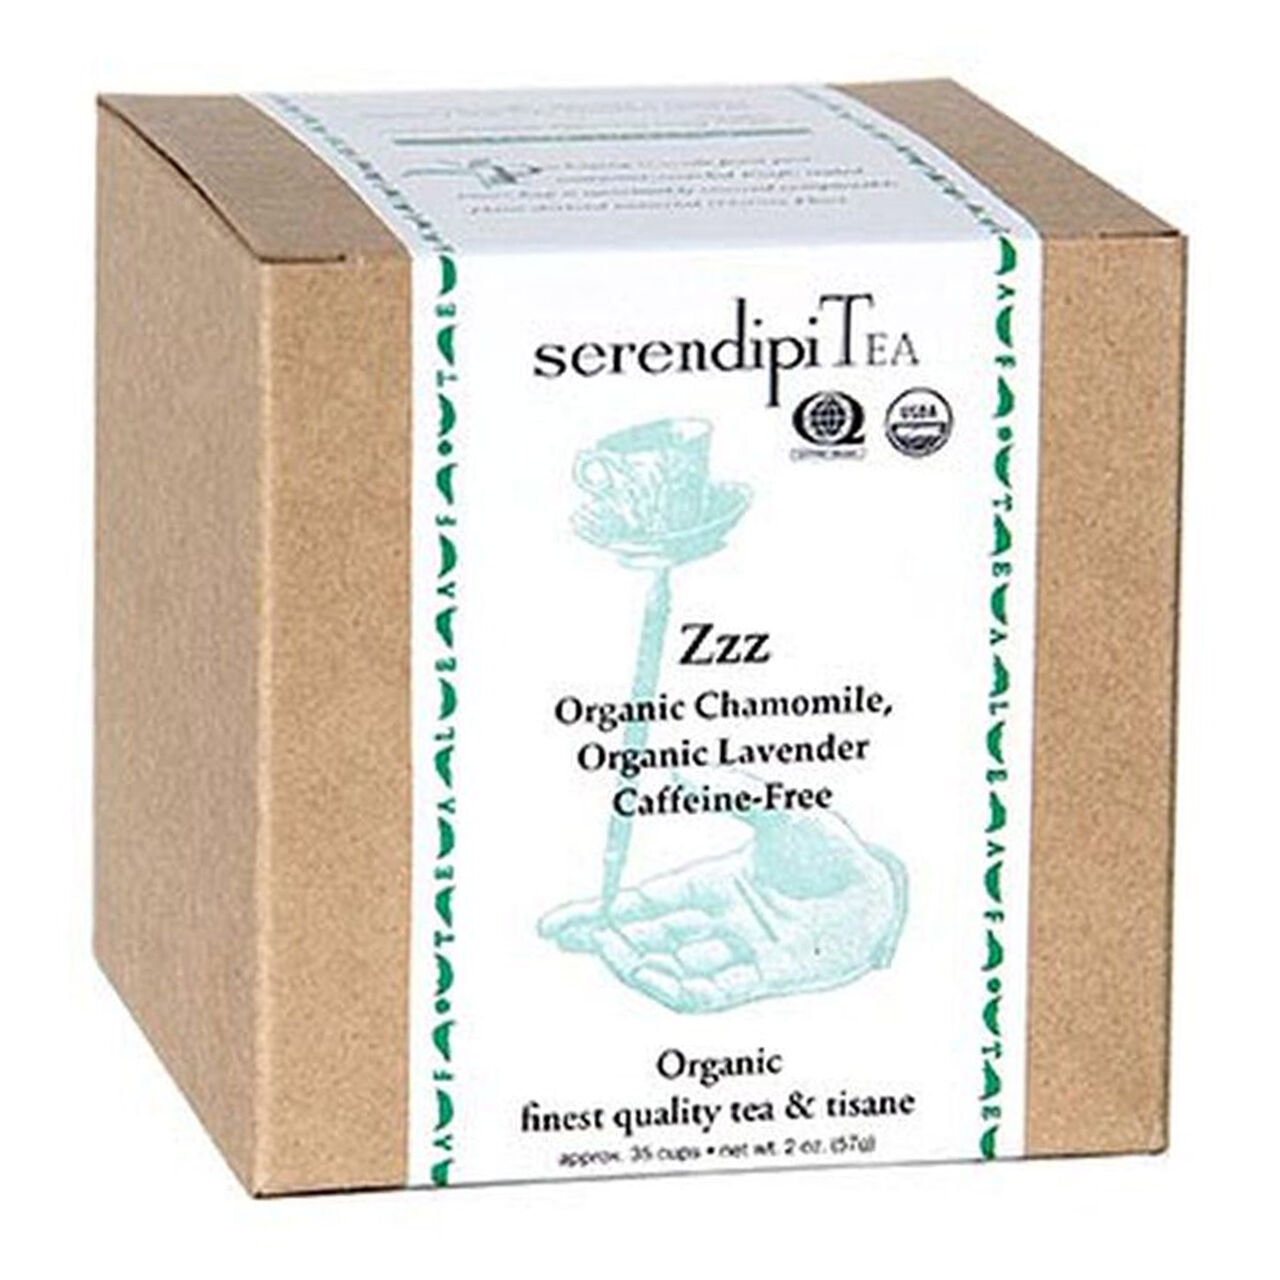 SerendipiTea Zzz (Organic Chamomile and lavender) - 2oz, , large image number 0